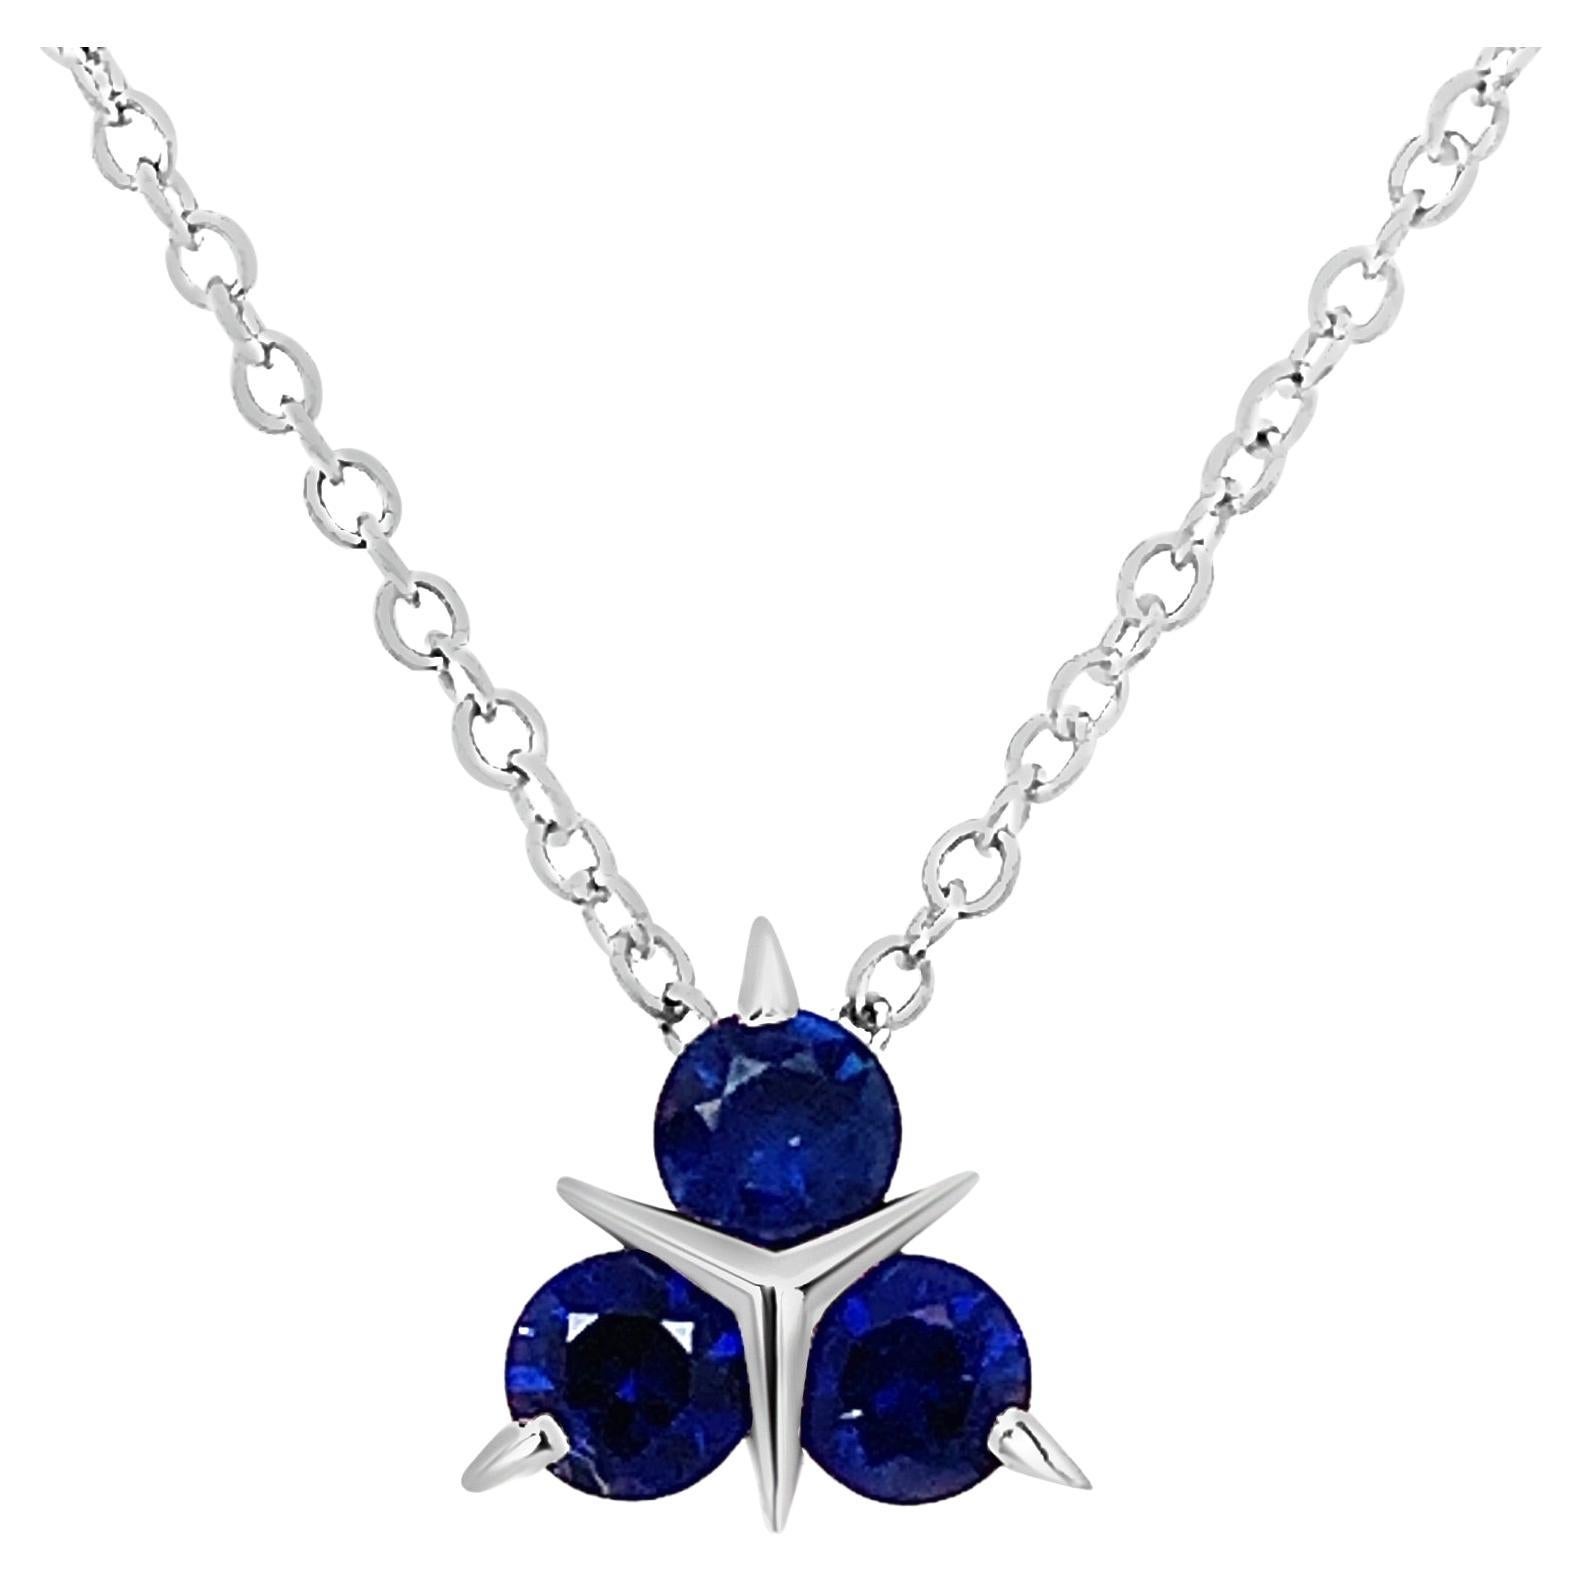 18 Karat White Gold Blue Sapphires Garavelli Pendant with Chain